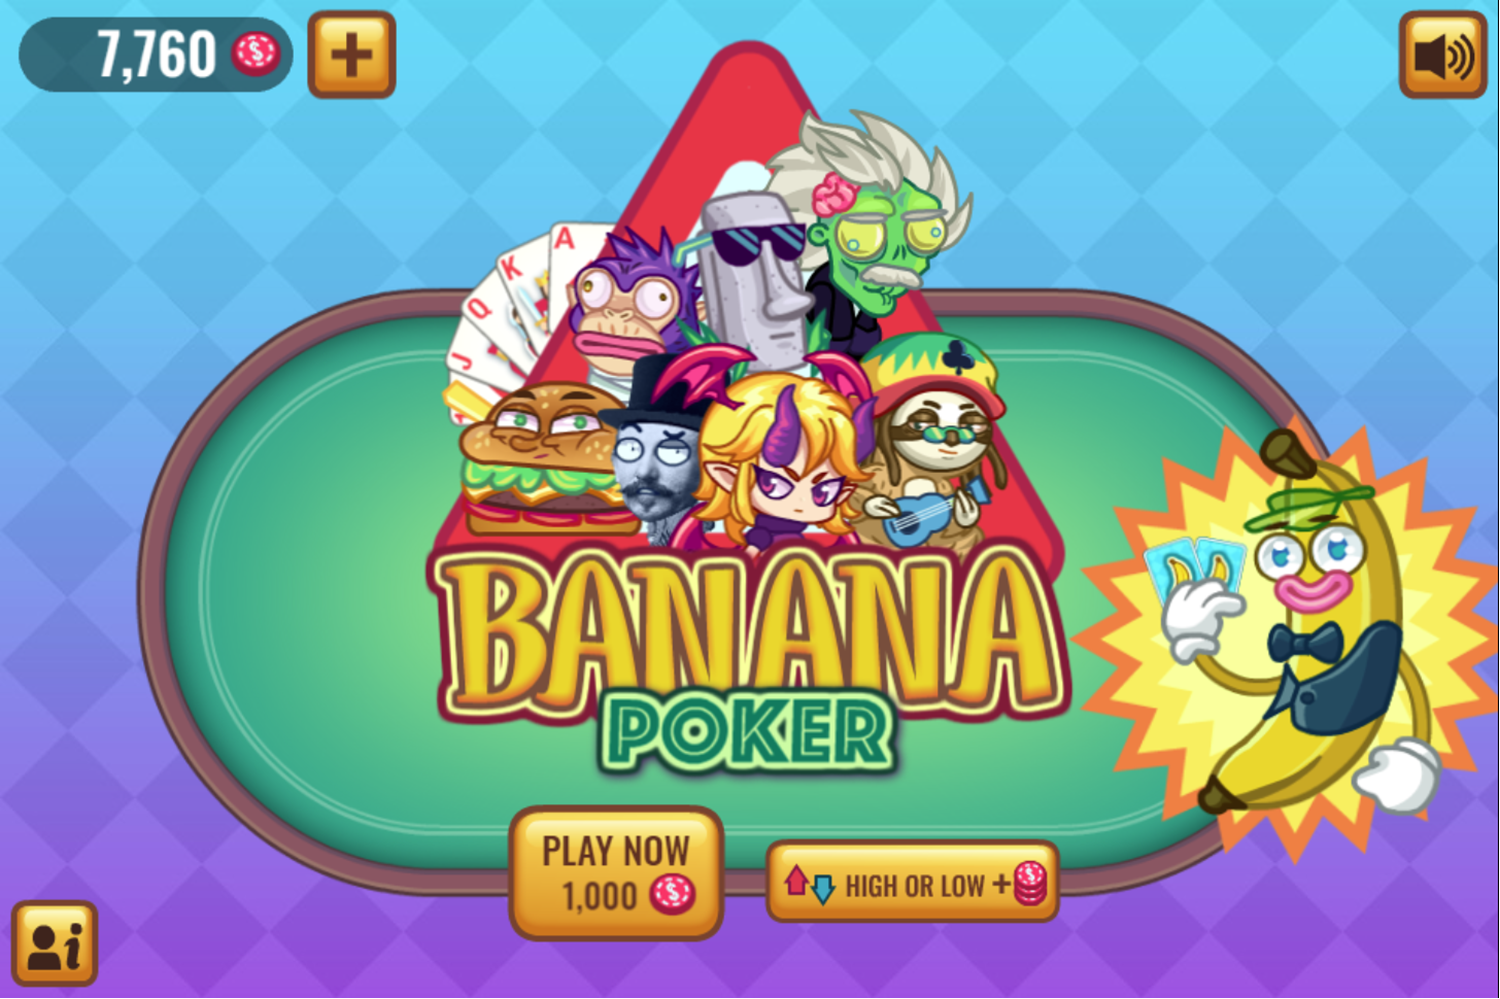 Banana Poker Welcome Screen Screenshot.